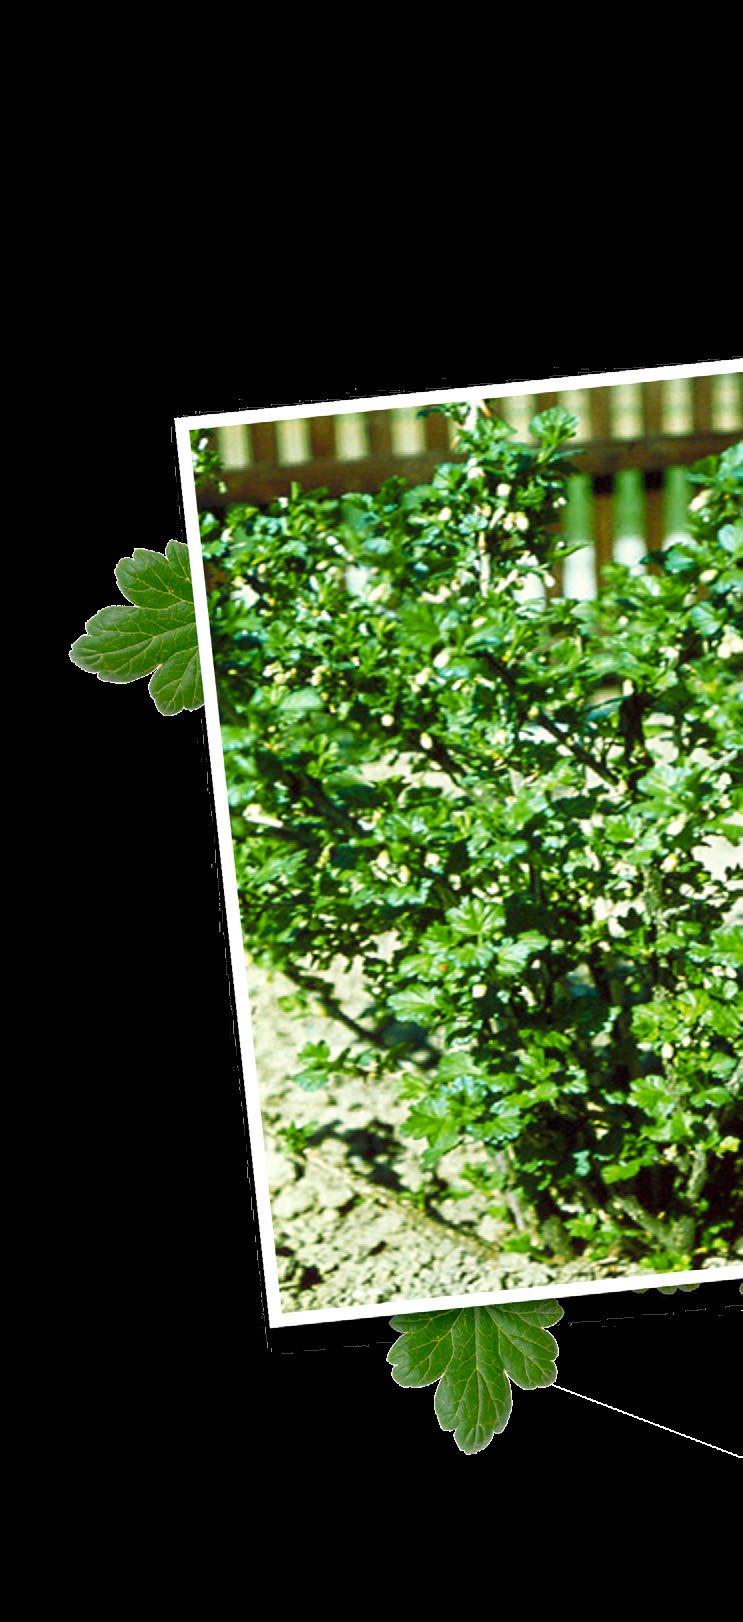 08 Stachelbeere Ribes uva-crispa, R.